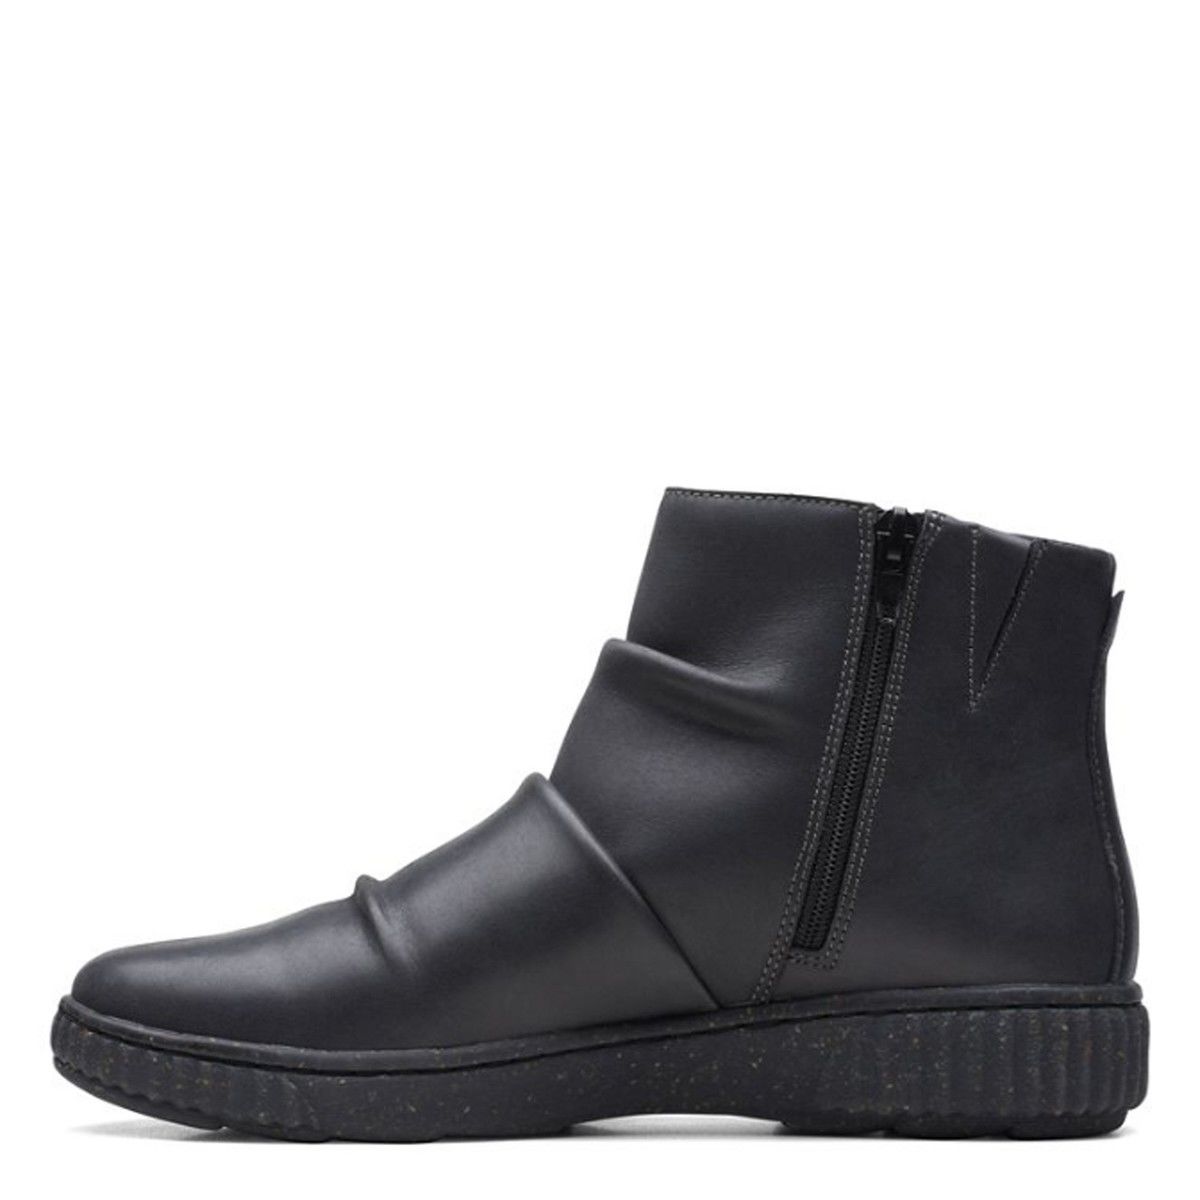 Clarks Caroline Rae D Fit Black leather Ankle Boots